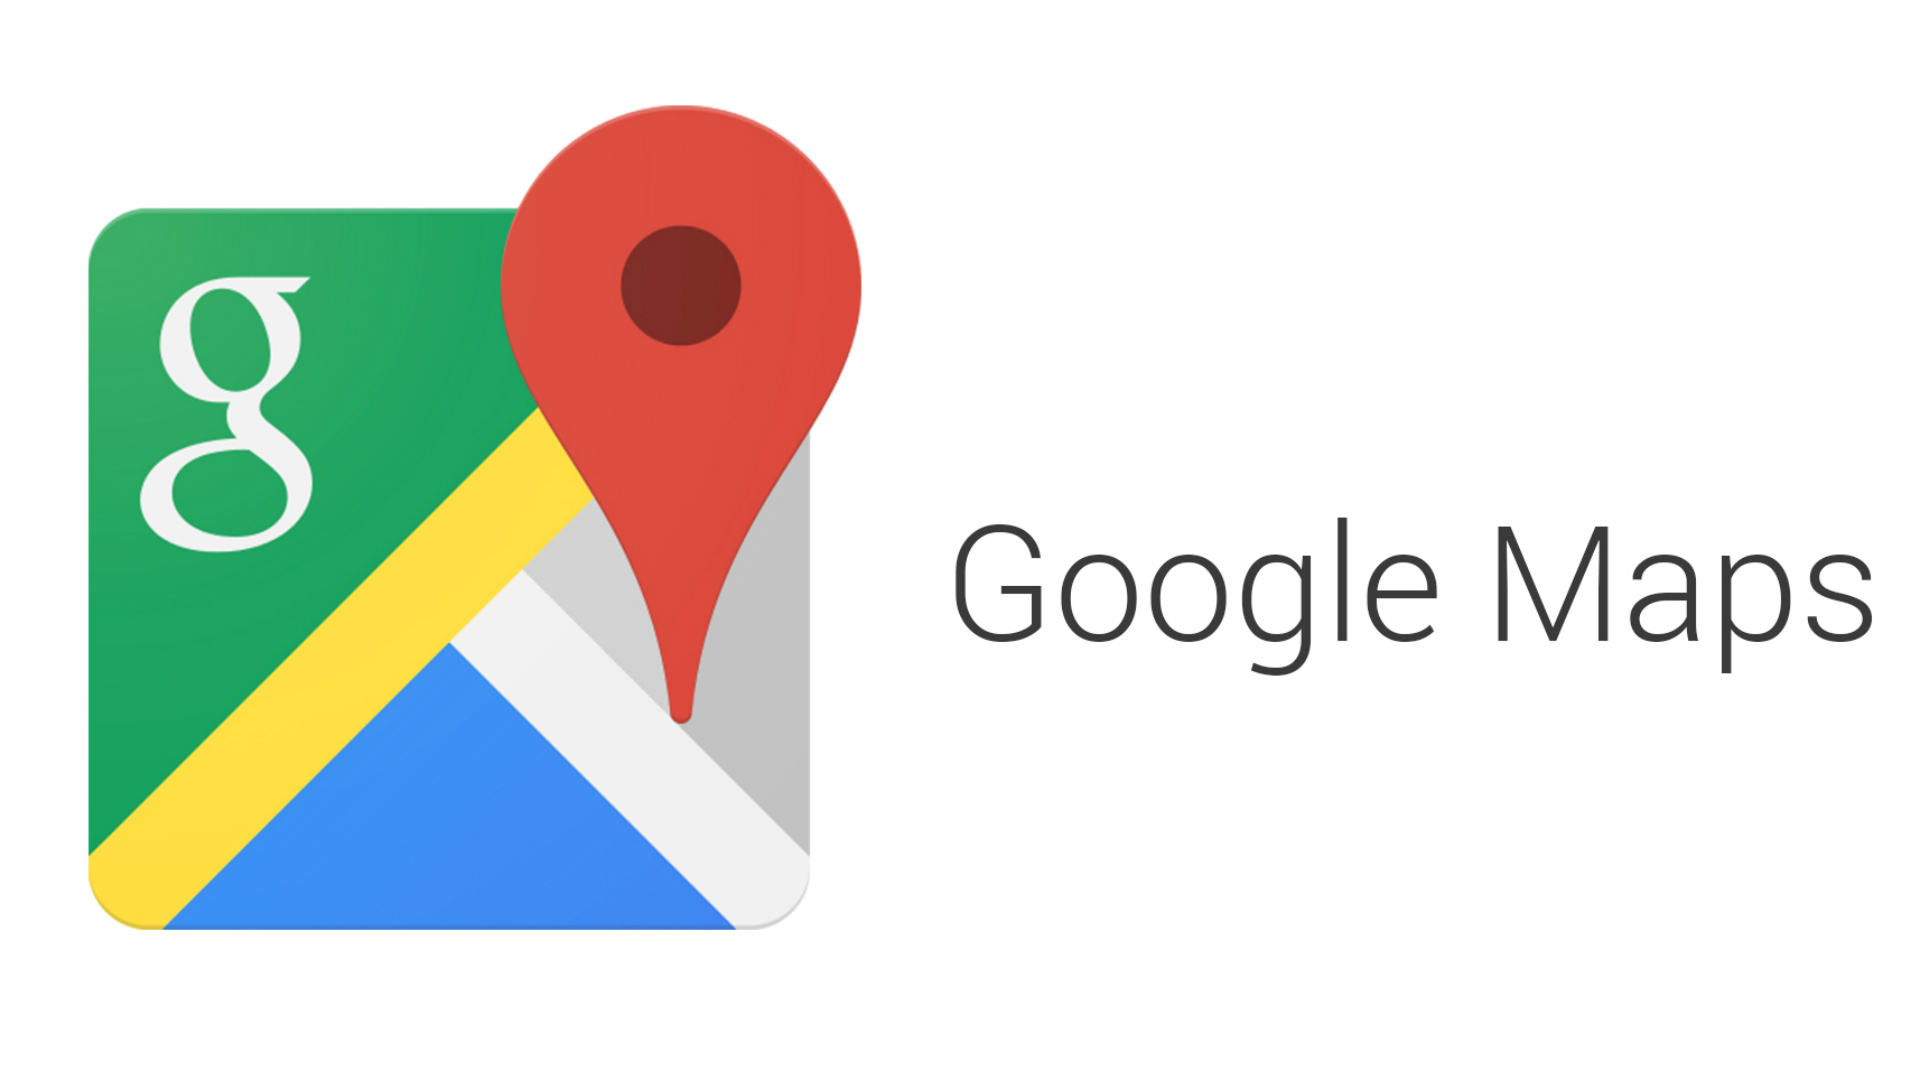 Google Maps radios